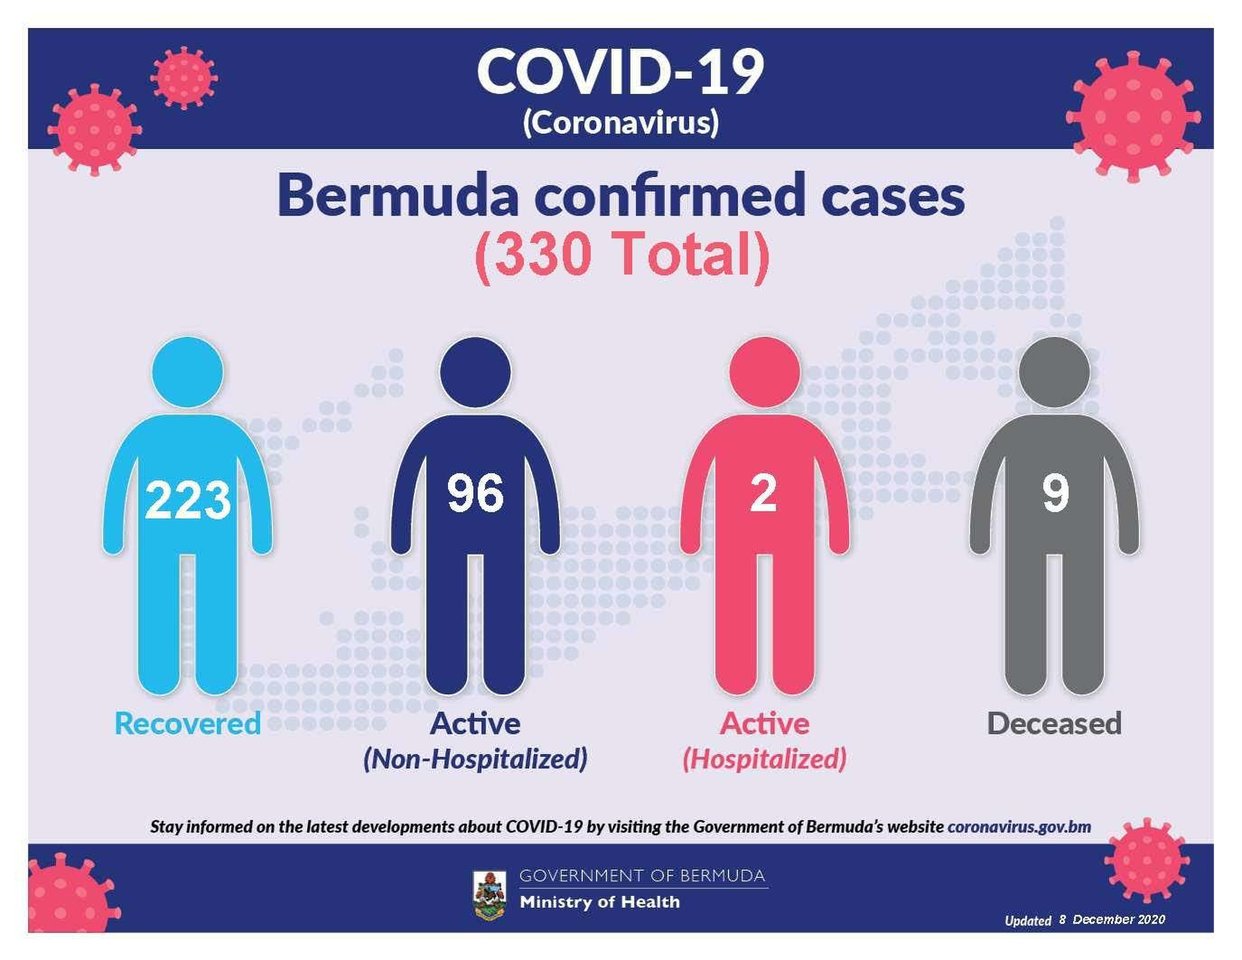 24 new COVID-19 cases (16 local) reported in Bermuda, 8 December